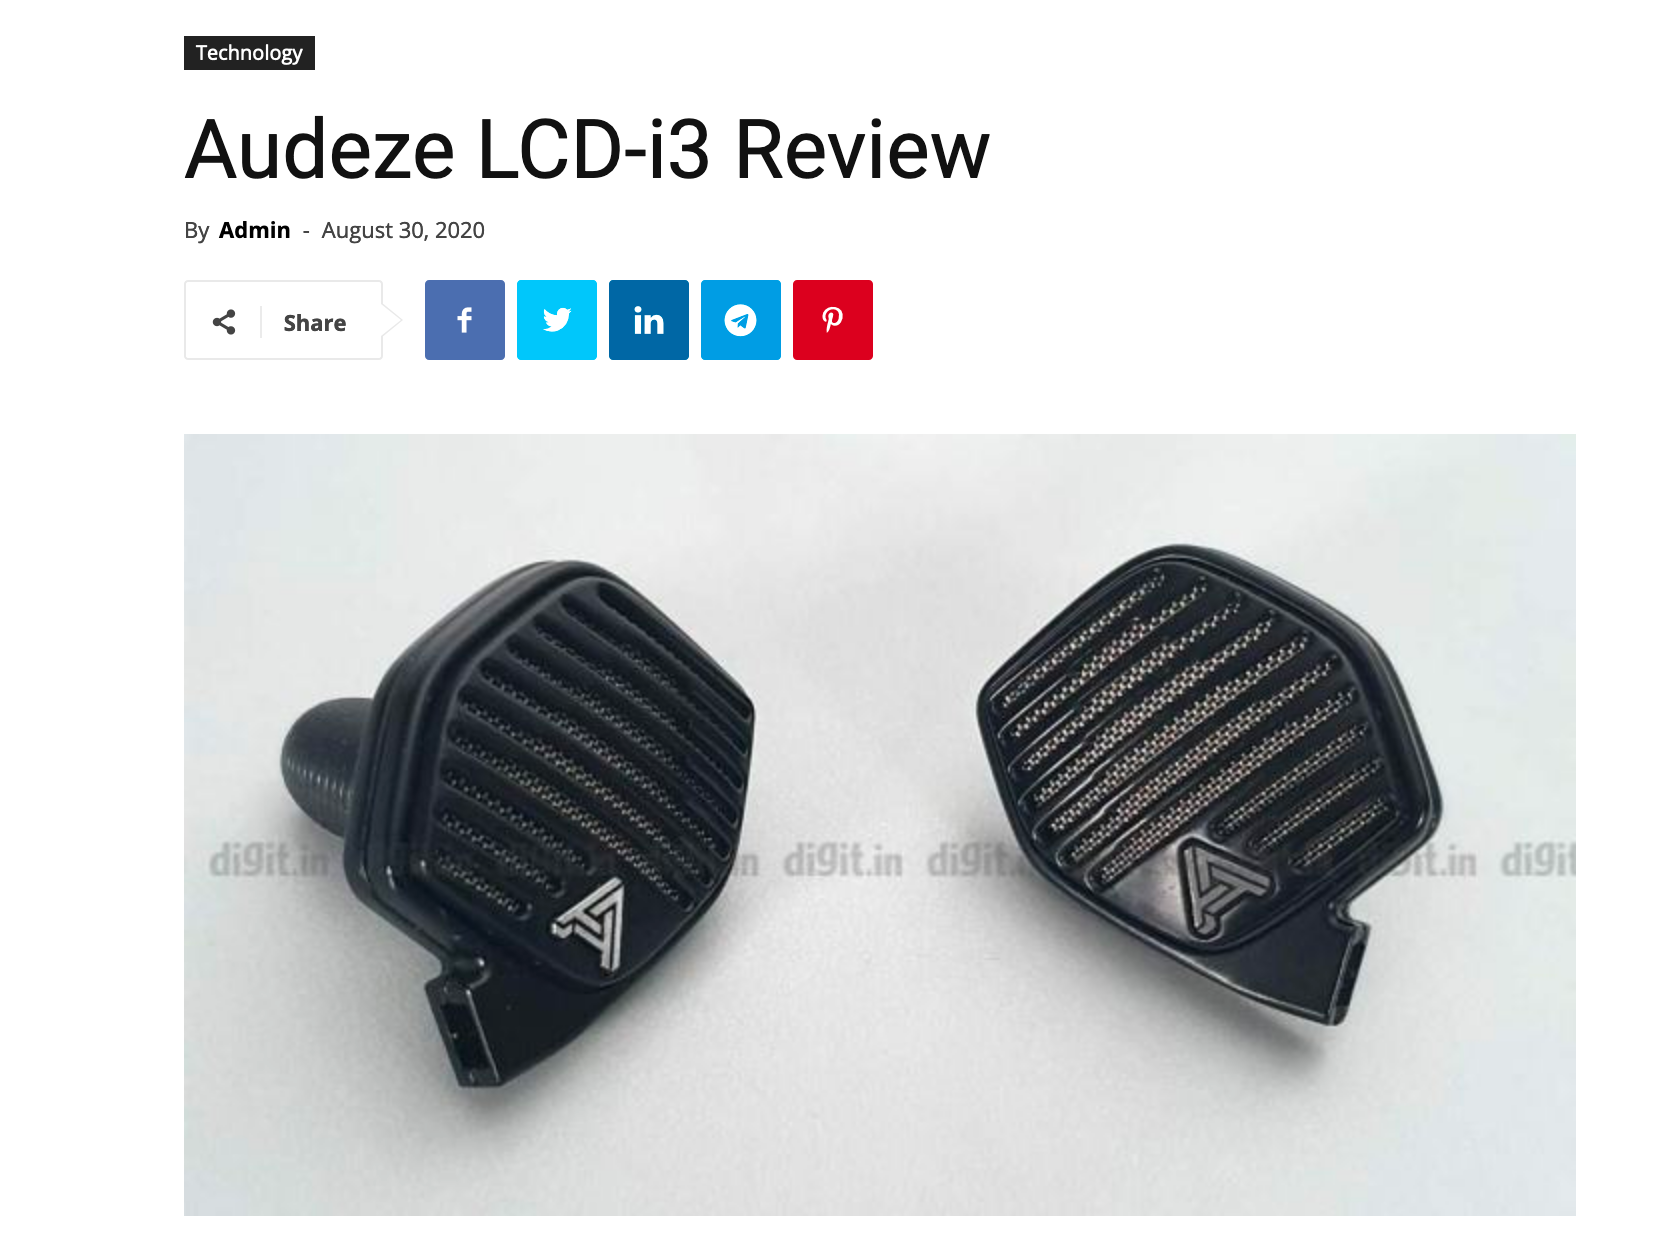 New World J Reviews the Audeze LCDi3